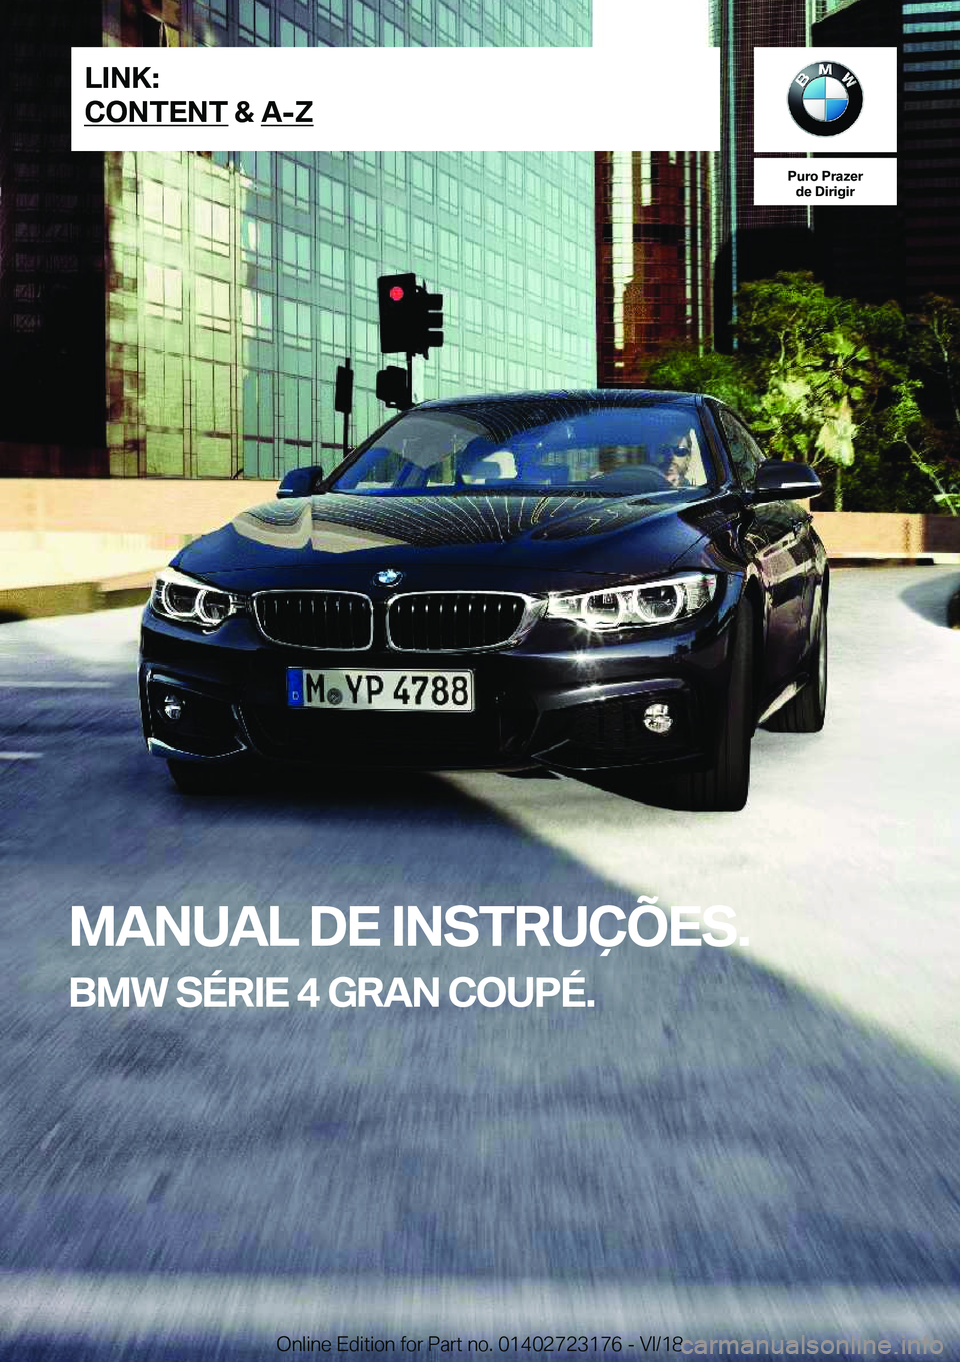 BMW 4 SERIES GRAN COUPE 2019  Manual do condutor (in Portuguese) �P�u�r�o��P�r�a�z�e�r�d�e��D�i�r�i�g�i�r
�M�A�N�U�A�L��D�E��I�N�S�T�R�U�